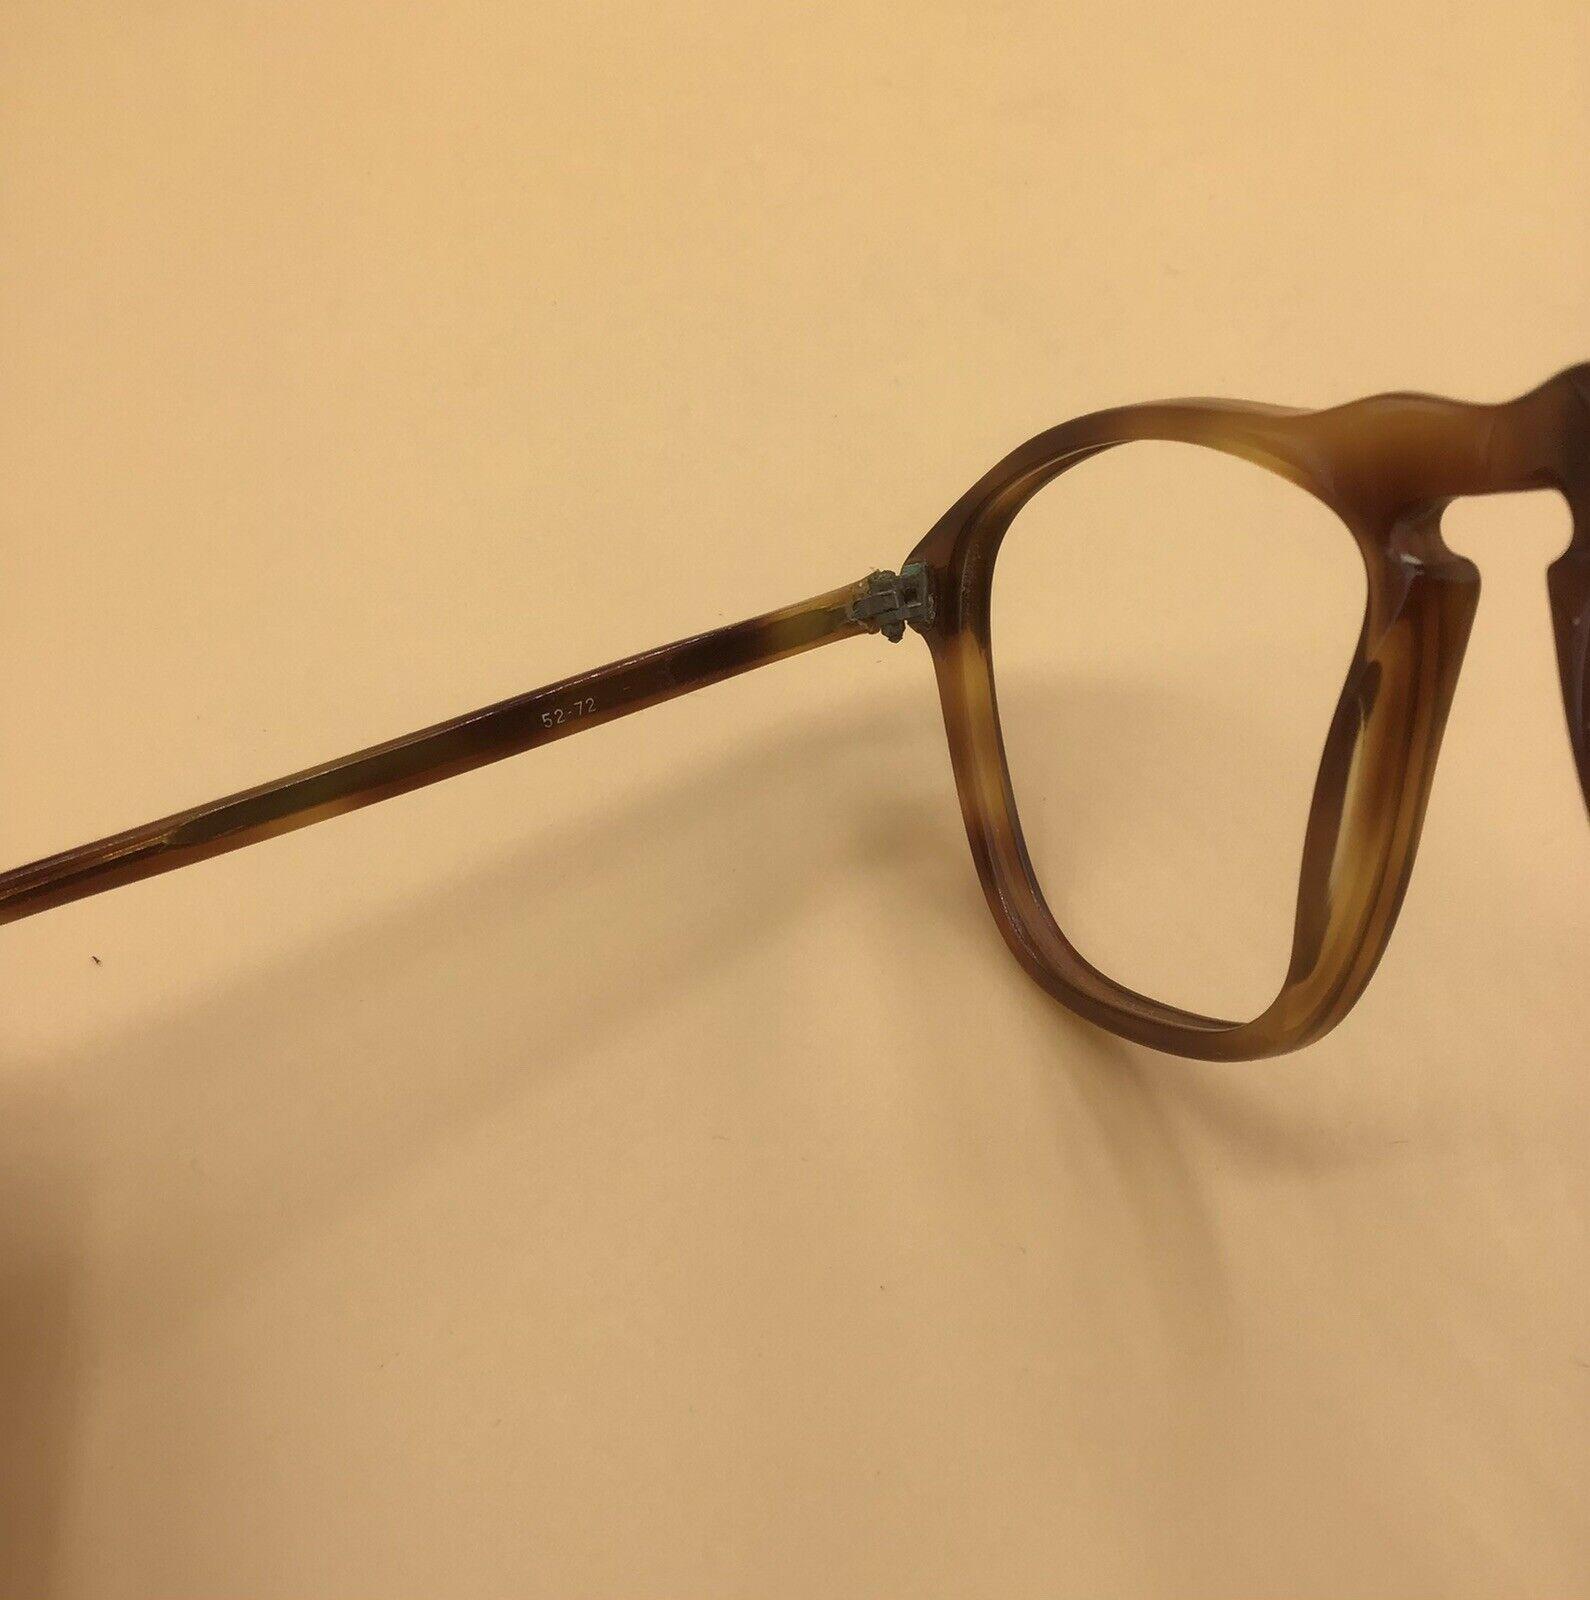 Persol Ratti occhiale vintage eyewear frame model 09127 brillen lunettes